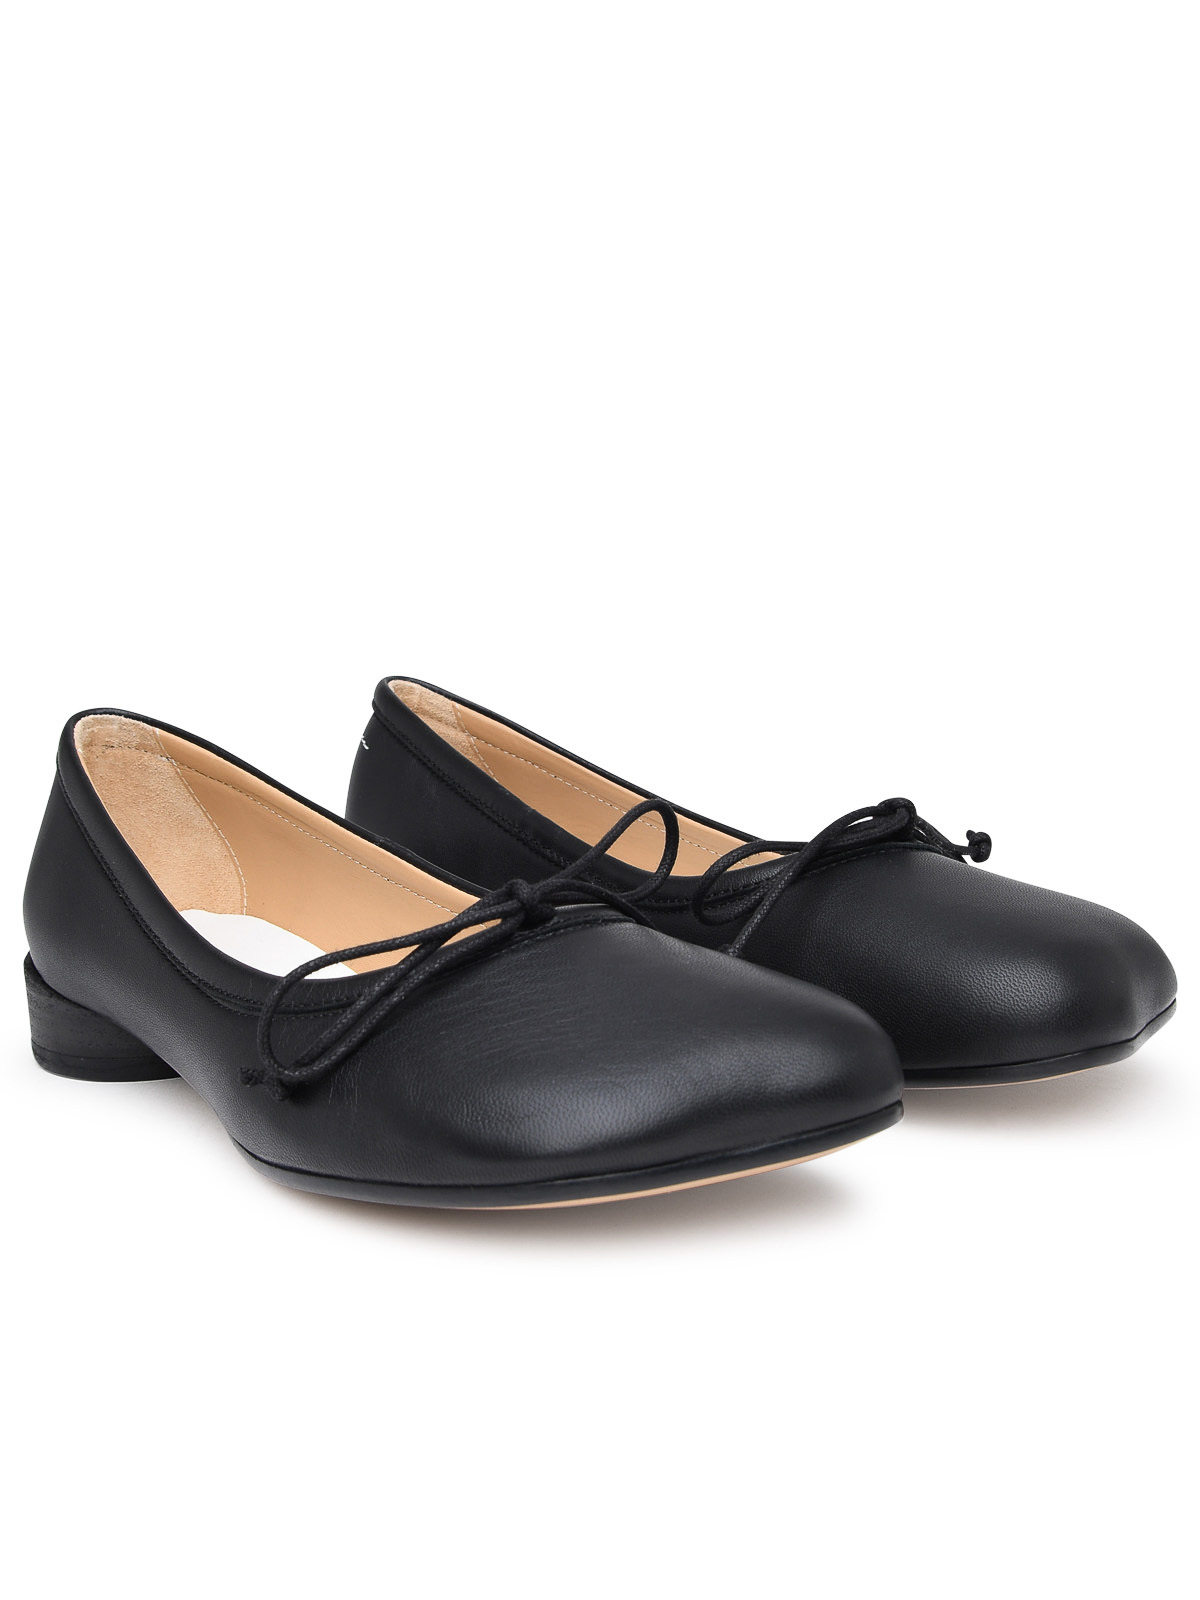 Flat shoes MM6 Maison Margiela - Ballerina in black leather